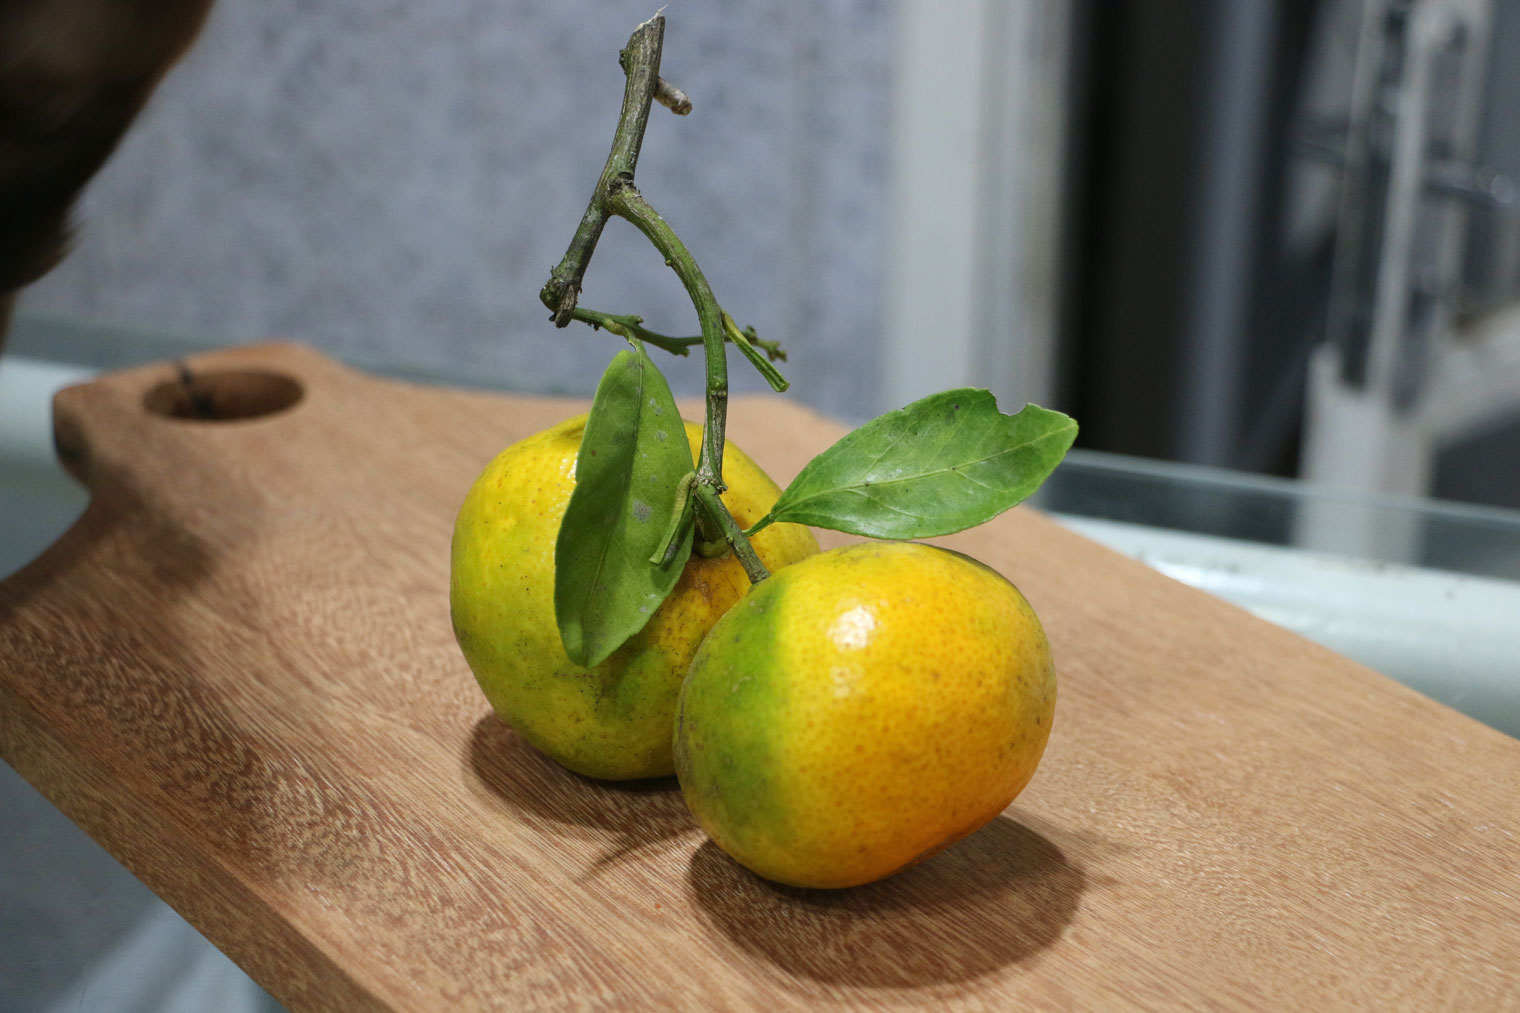 Green tangerine. Мандарин бергамот. Зеленый мандарин. Желто зеленый фрукт. Желтый фрукт с зелеными листьями.